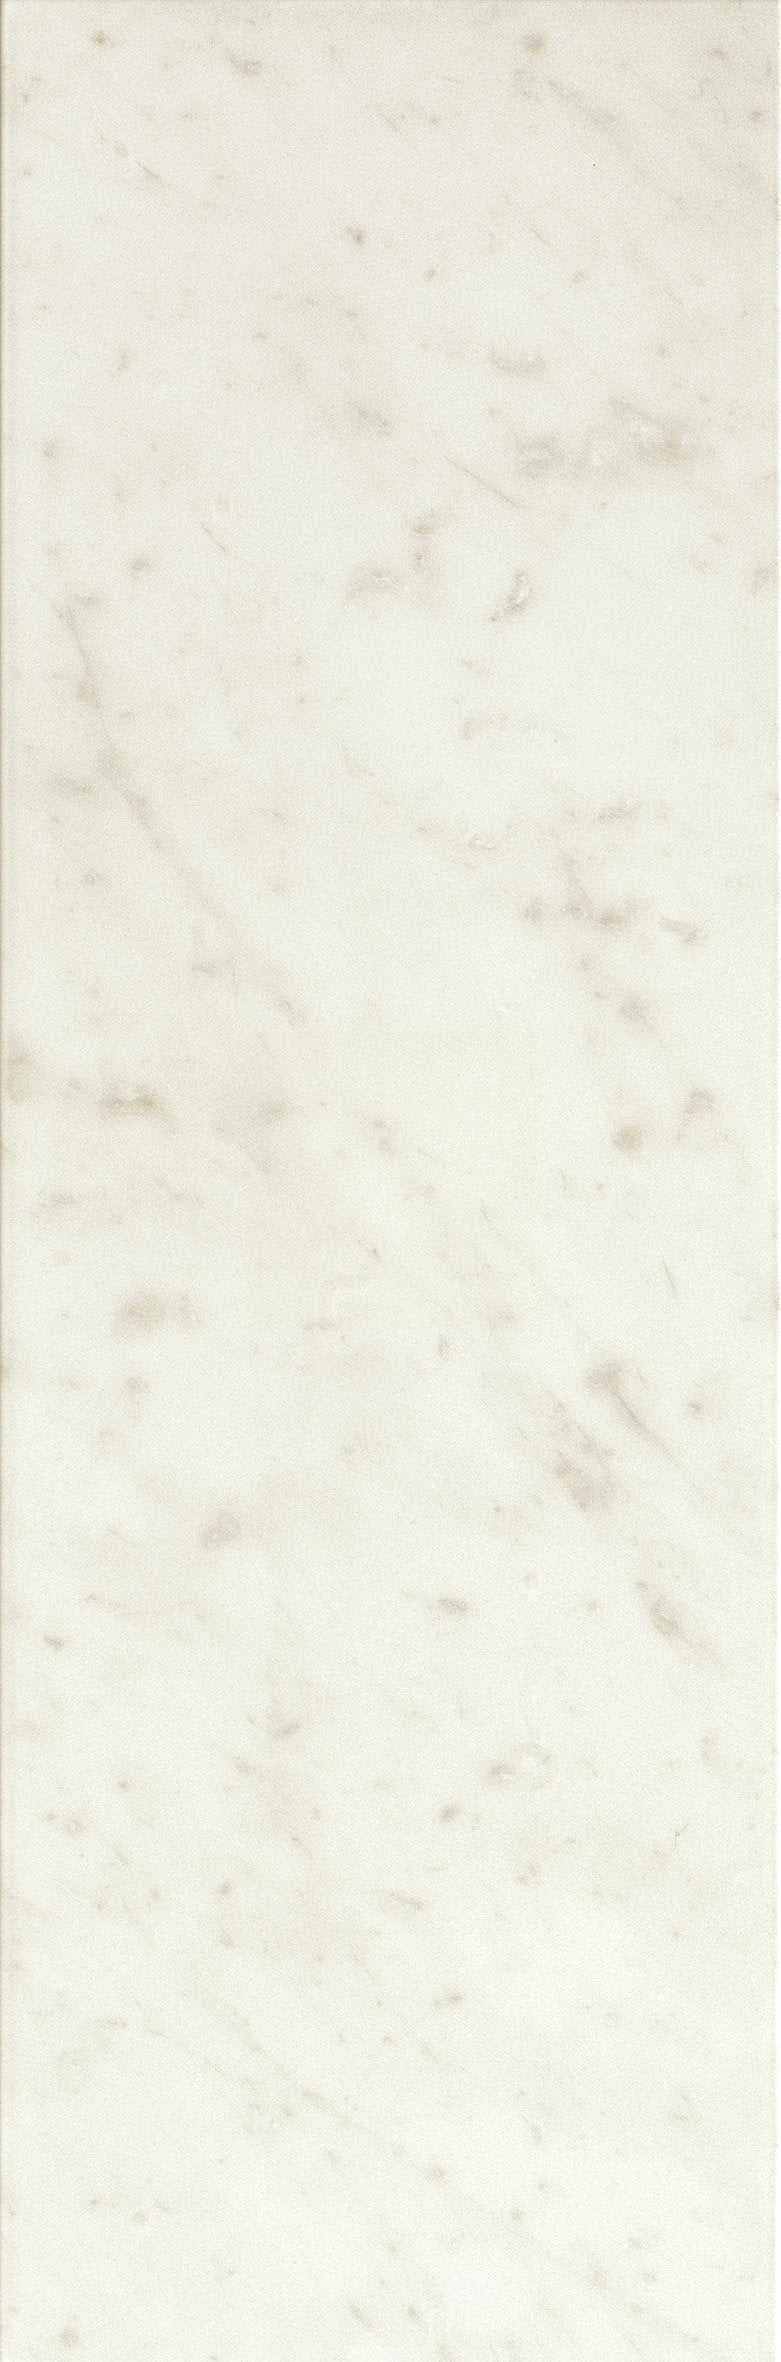 Carrara Brillante Italian White Body Tiles (IT0075)